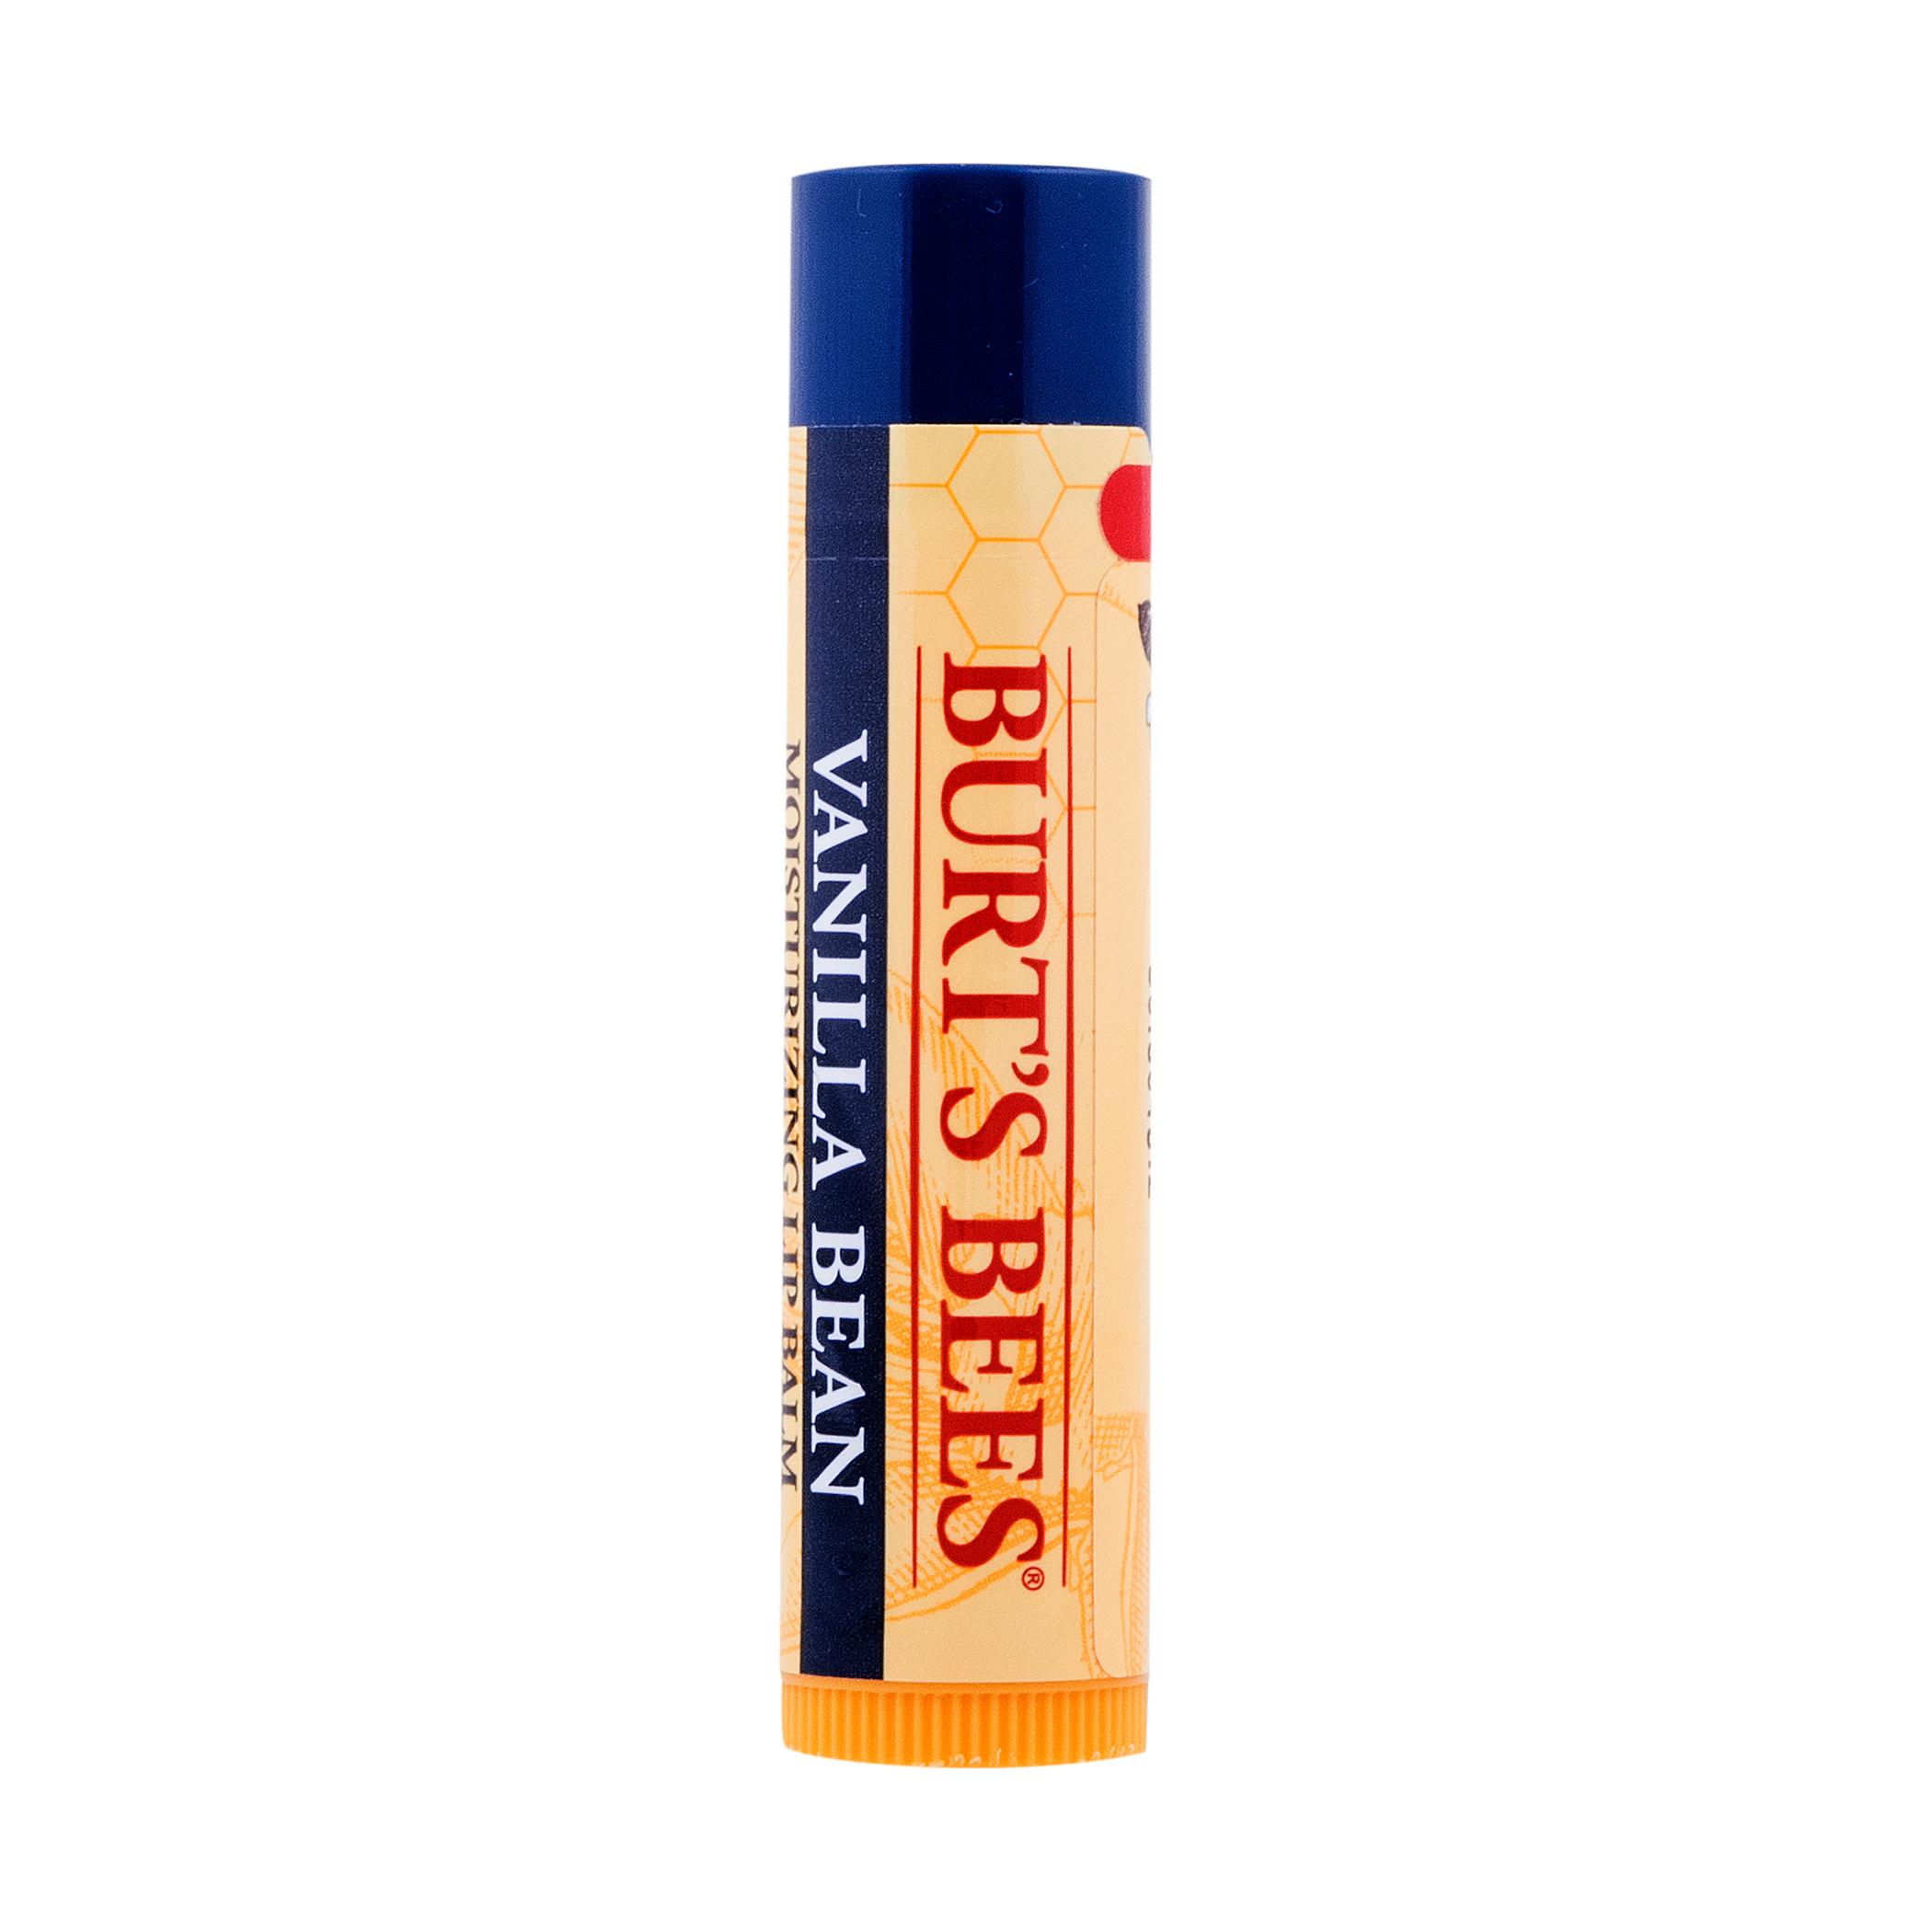 BURT'S BEES Burt's Bees 100% Natural Moisturizing Lip Balm Vanilla